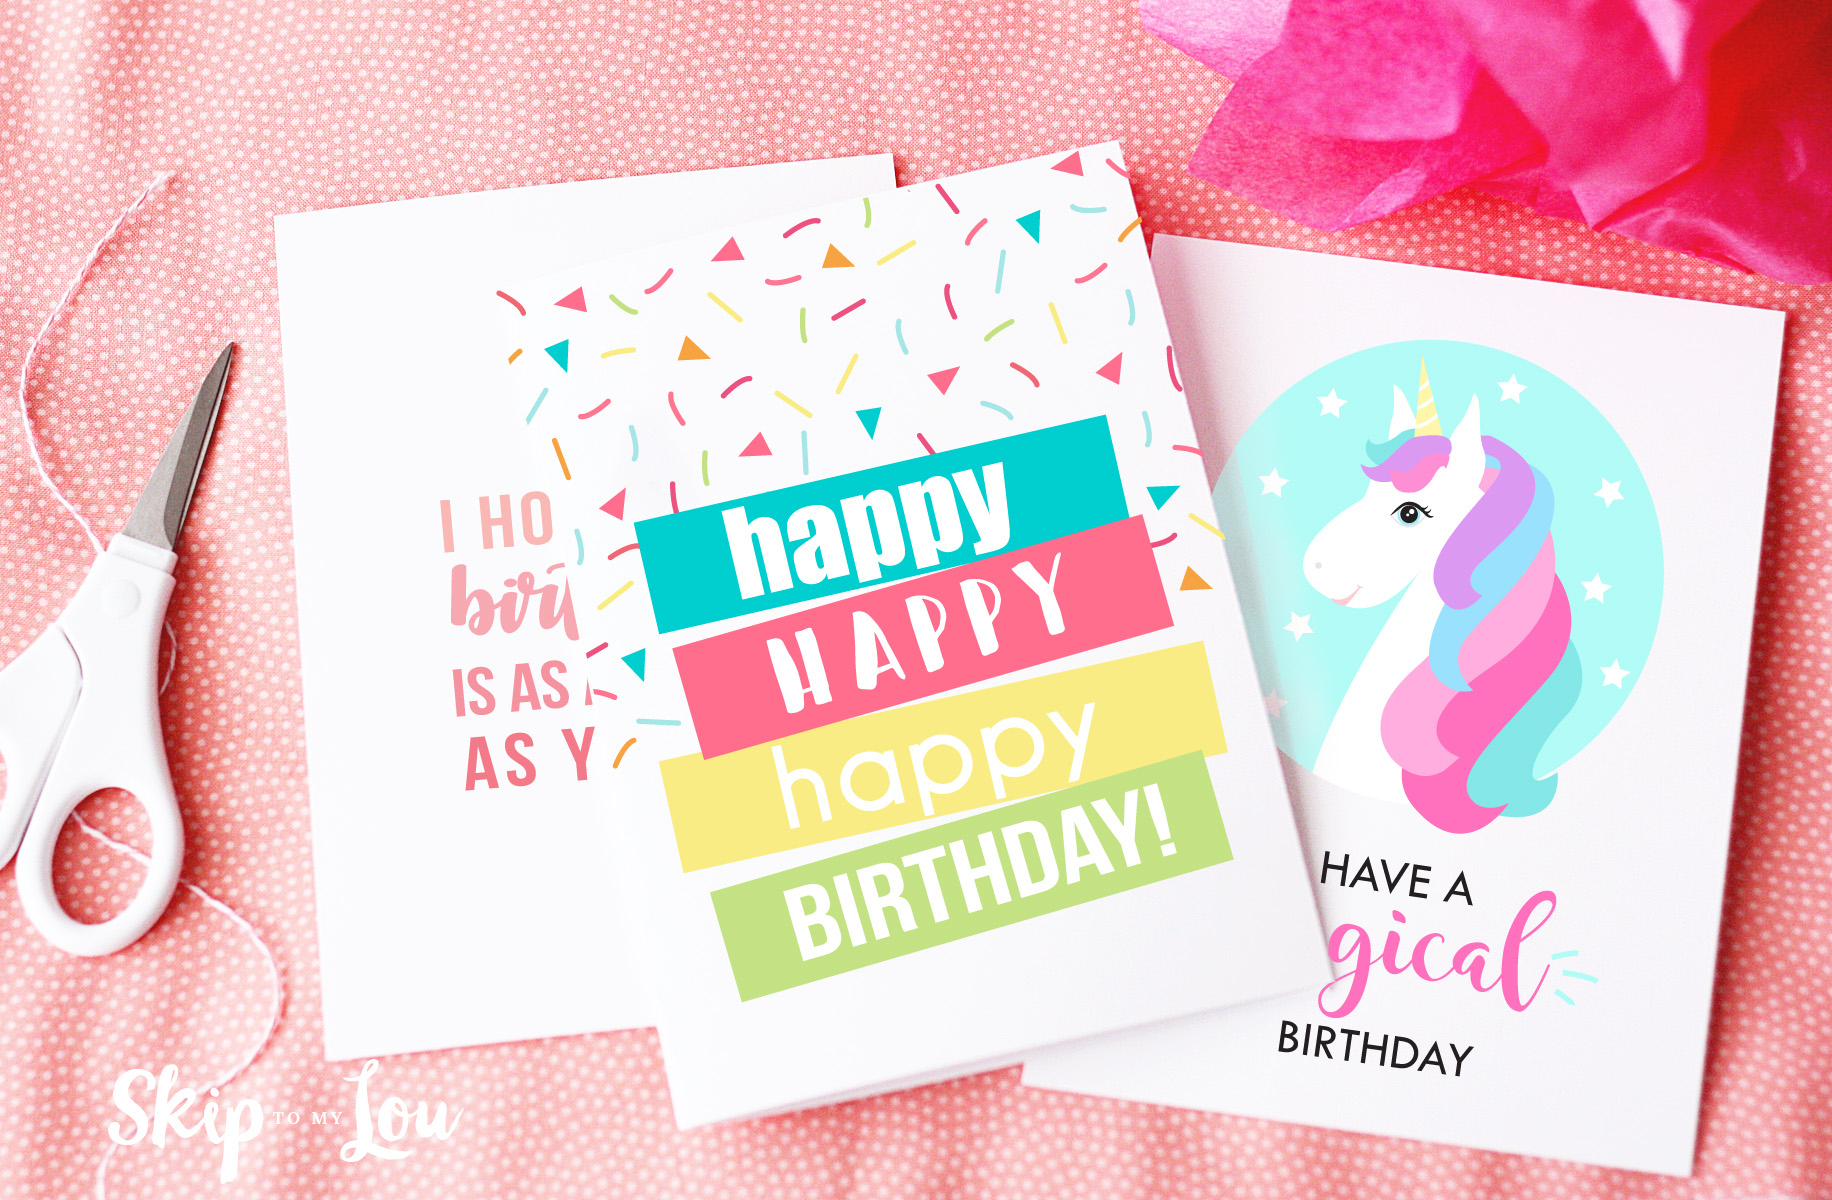 Free Printable Birthday Cards | Skip To My Lou - Free Printable Birthday Cards For Wife